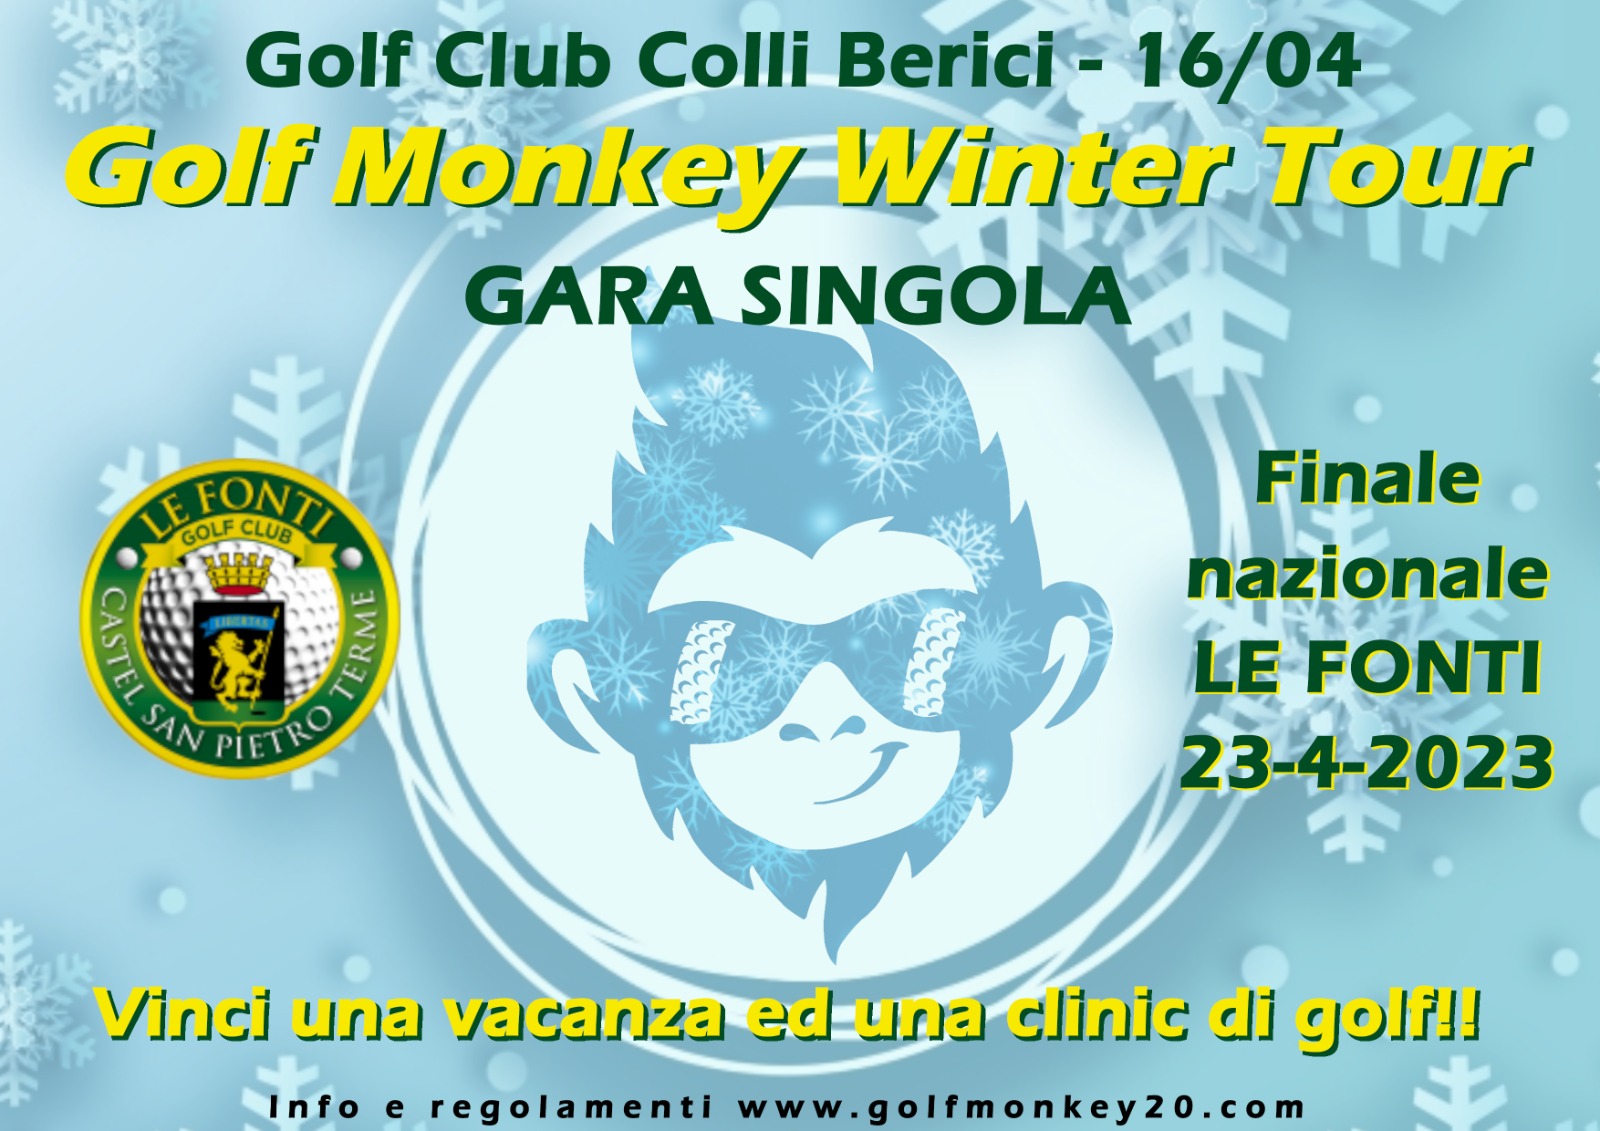 Golf Monkey Winter